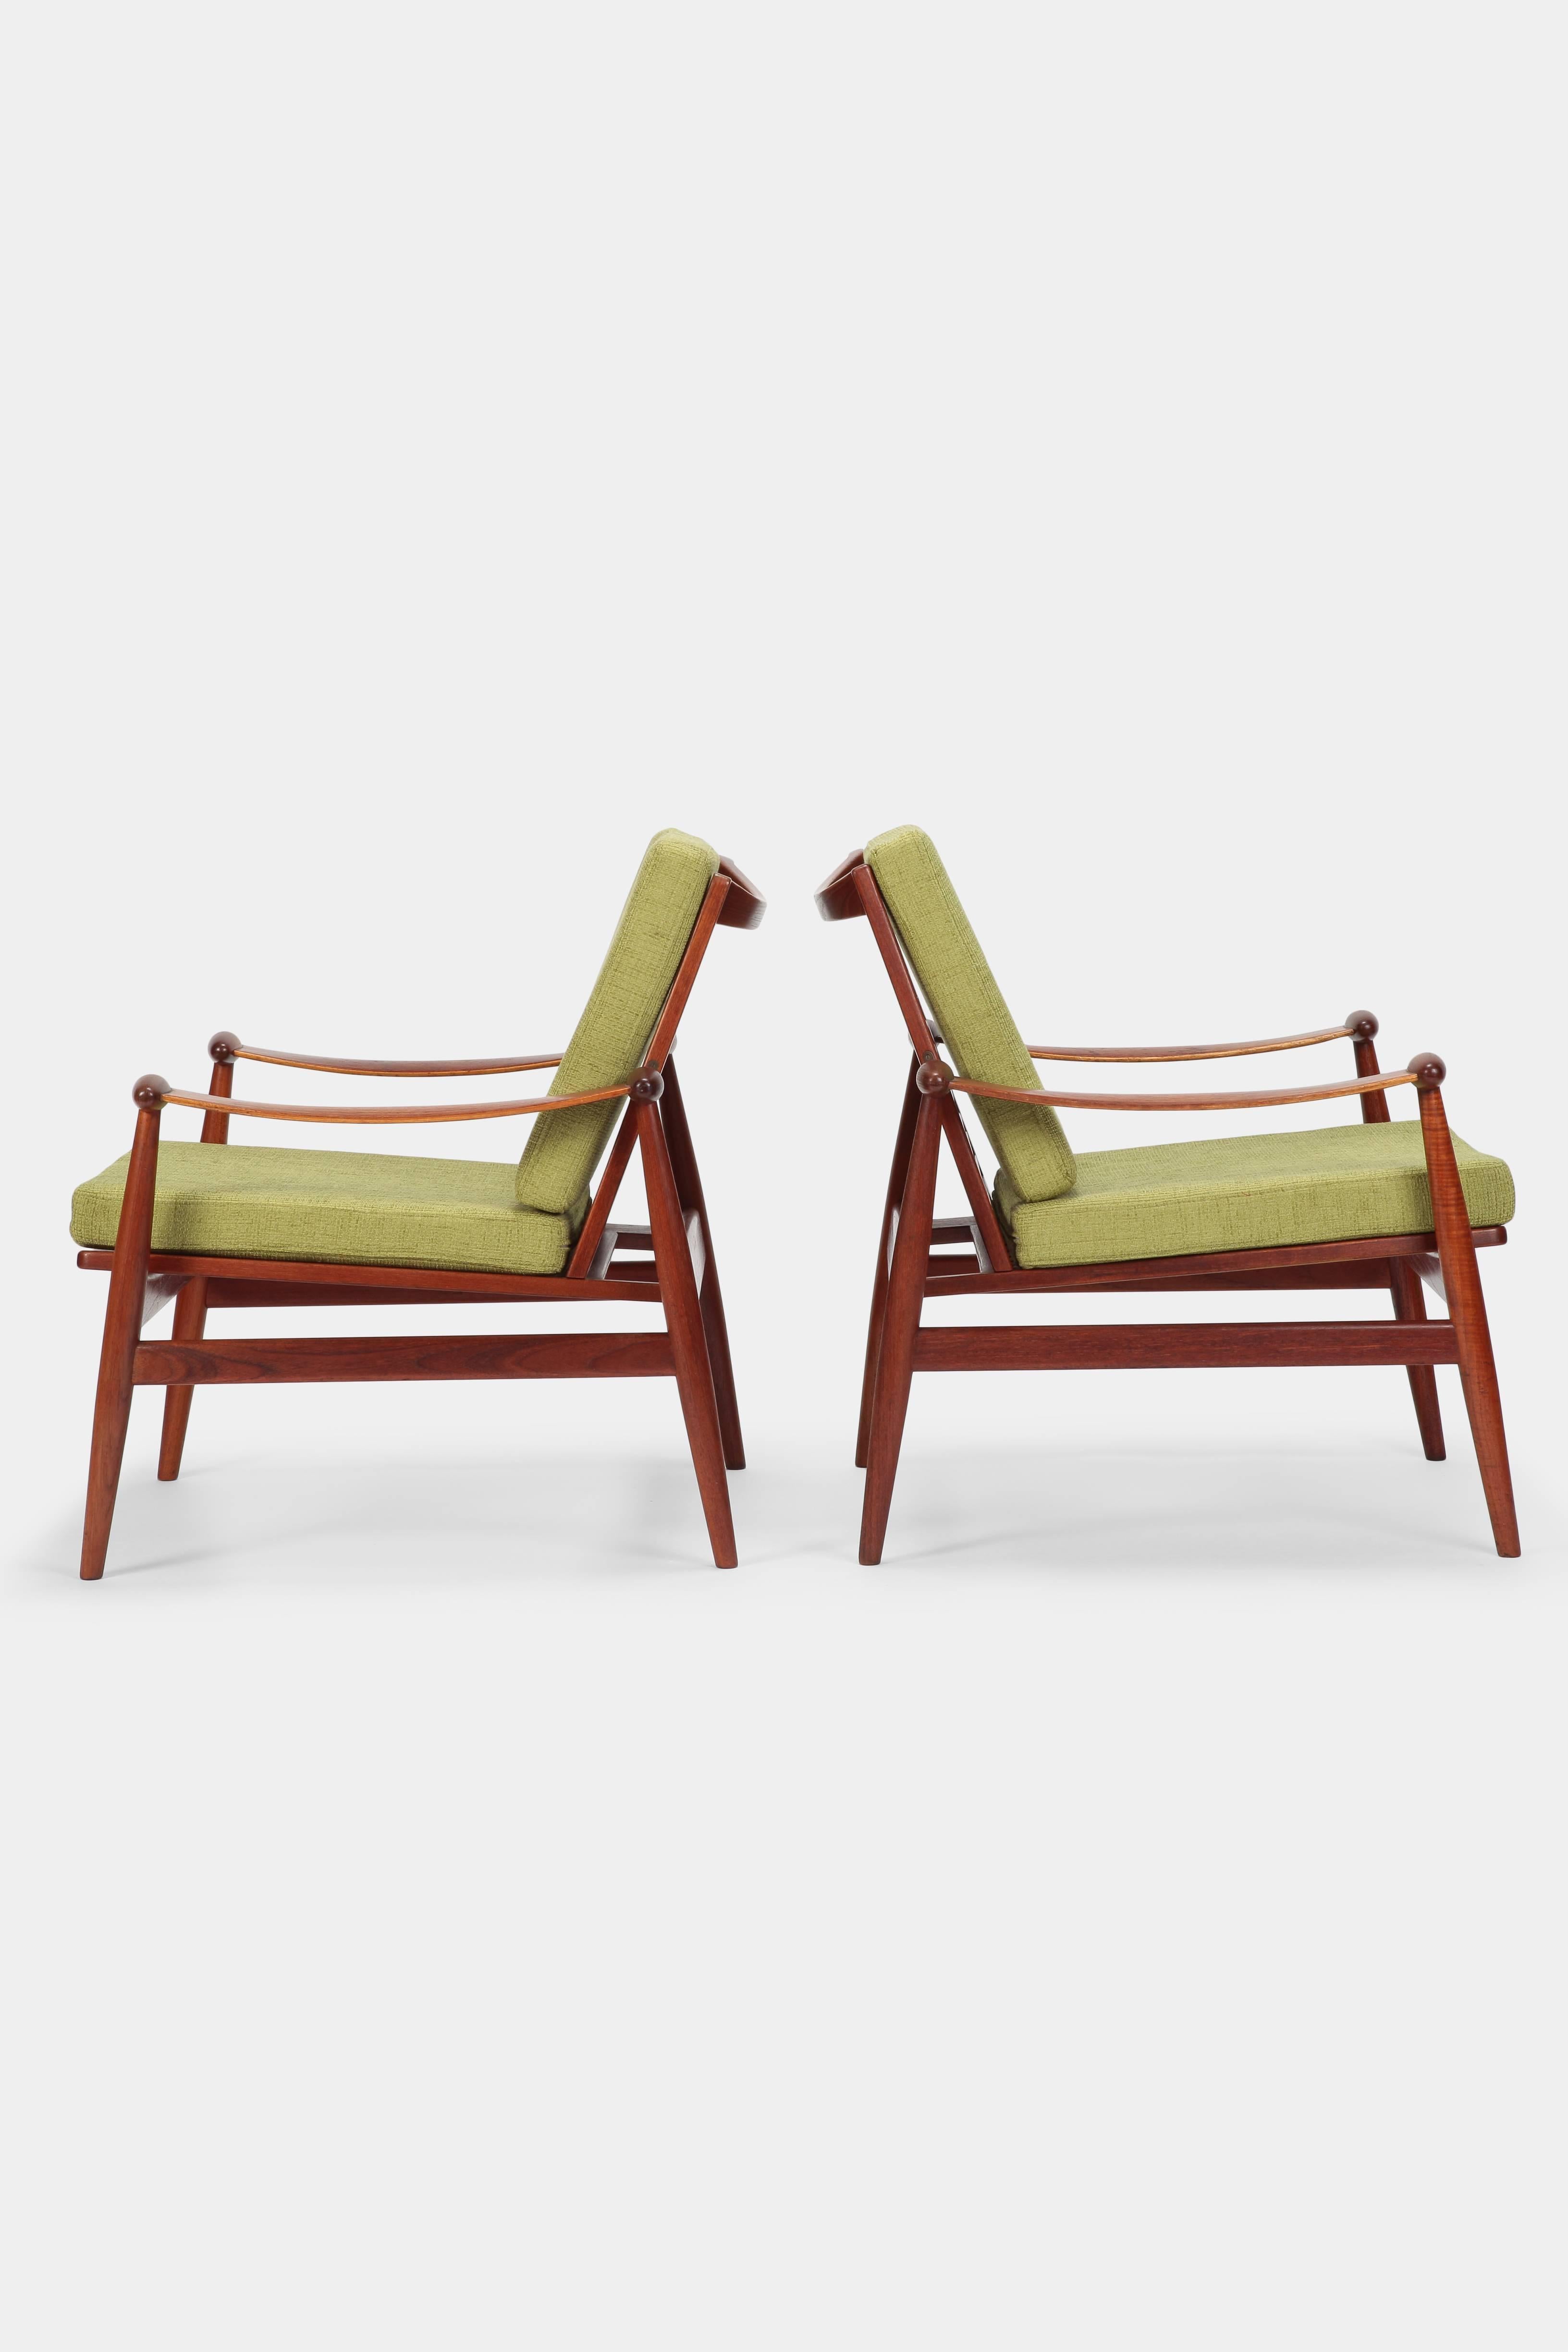 Mid-Century Modern Finn Juhl “Spade” Lounge Chairs France & Daverkosen, 1960s